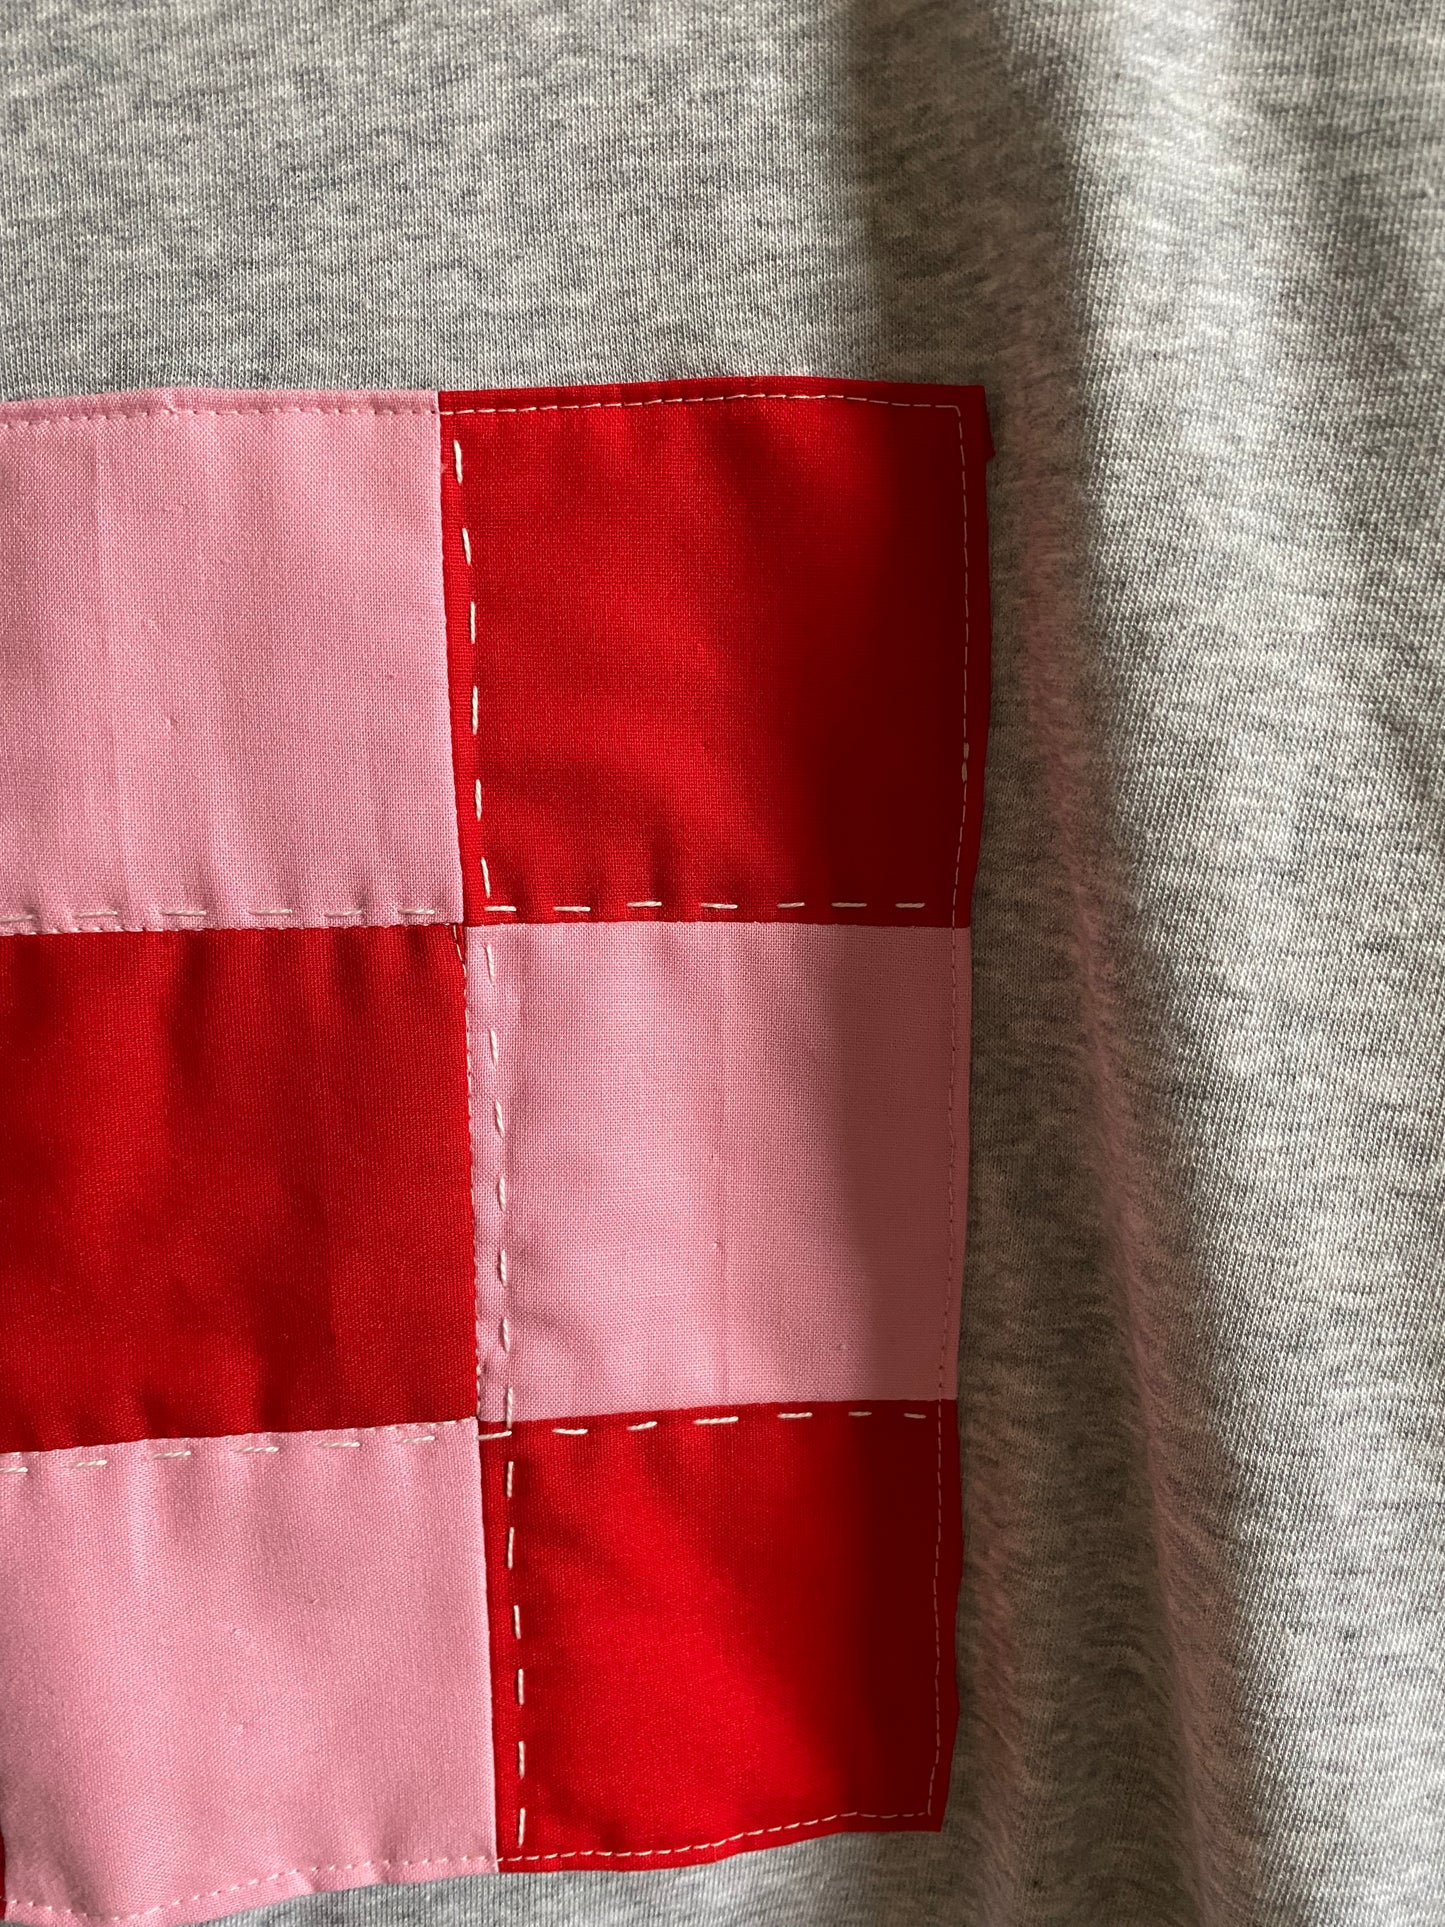 Red & Pink Check /  Sweatshirt